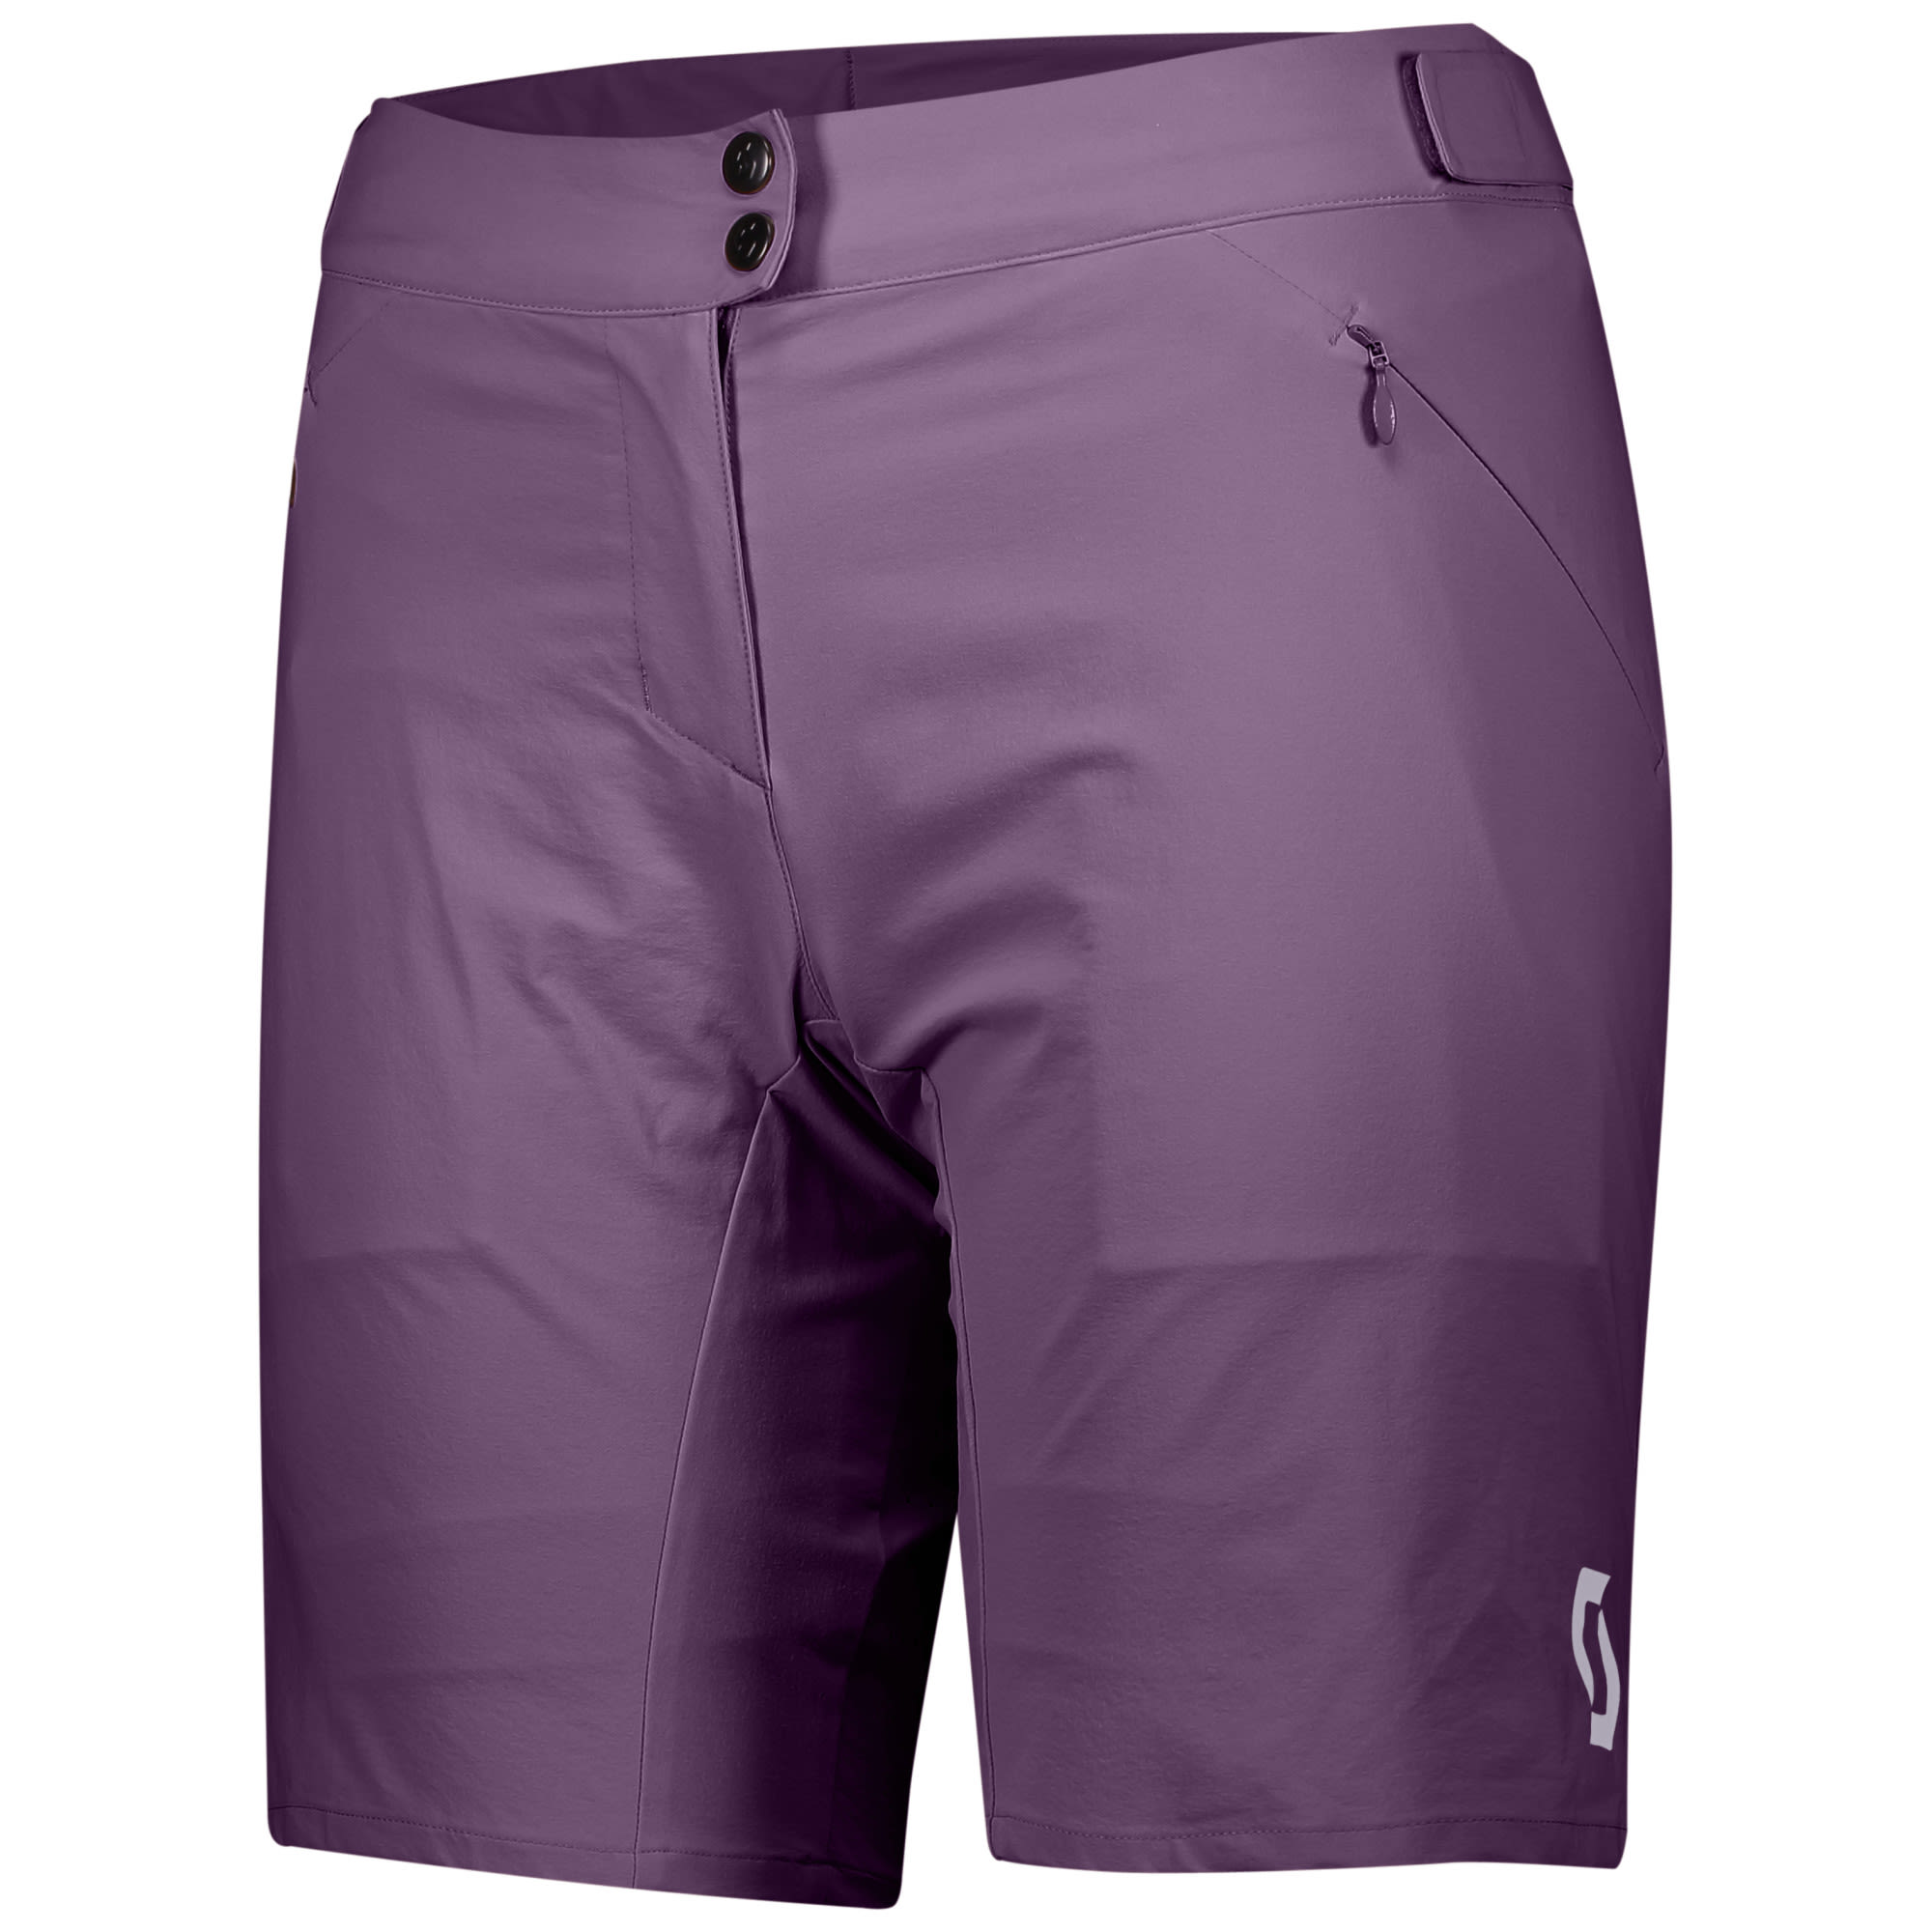 Scott W Endurance Long-sleeve/fit W/pad Shorts Lila | Damen Fahrrad Shorts